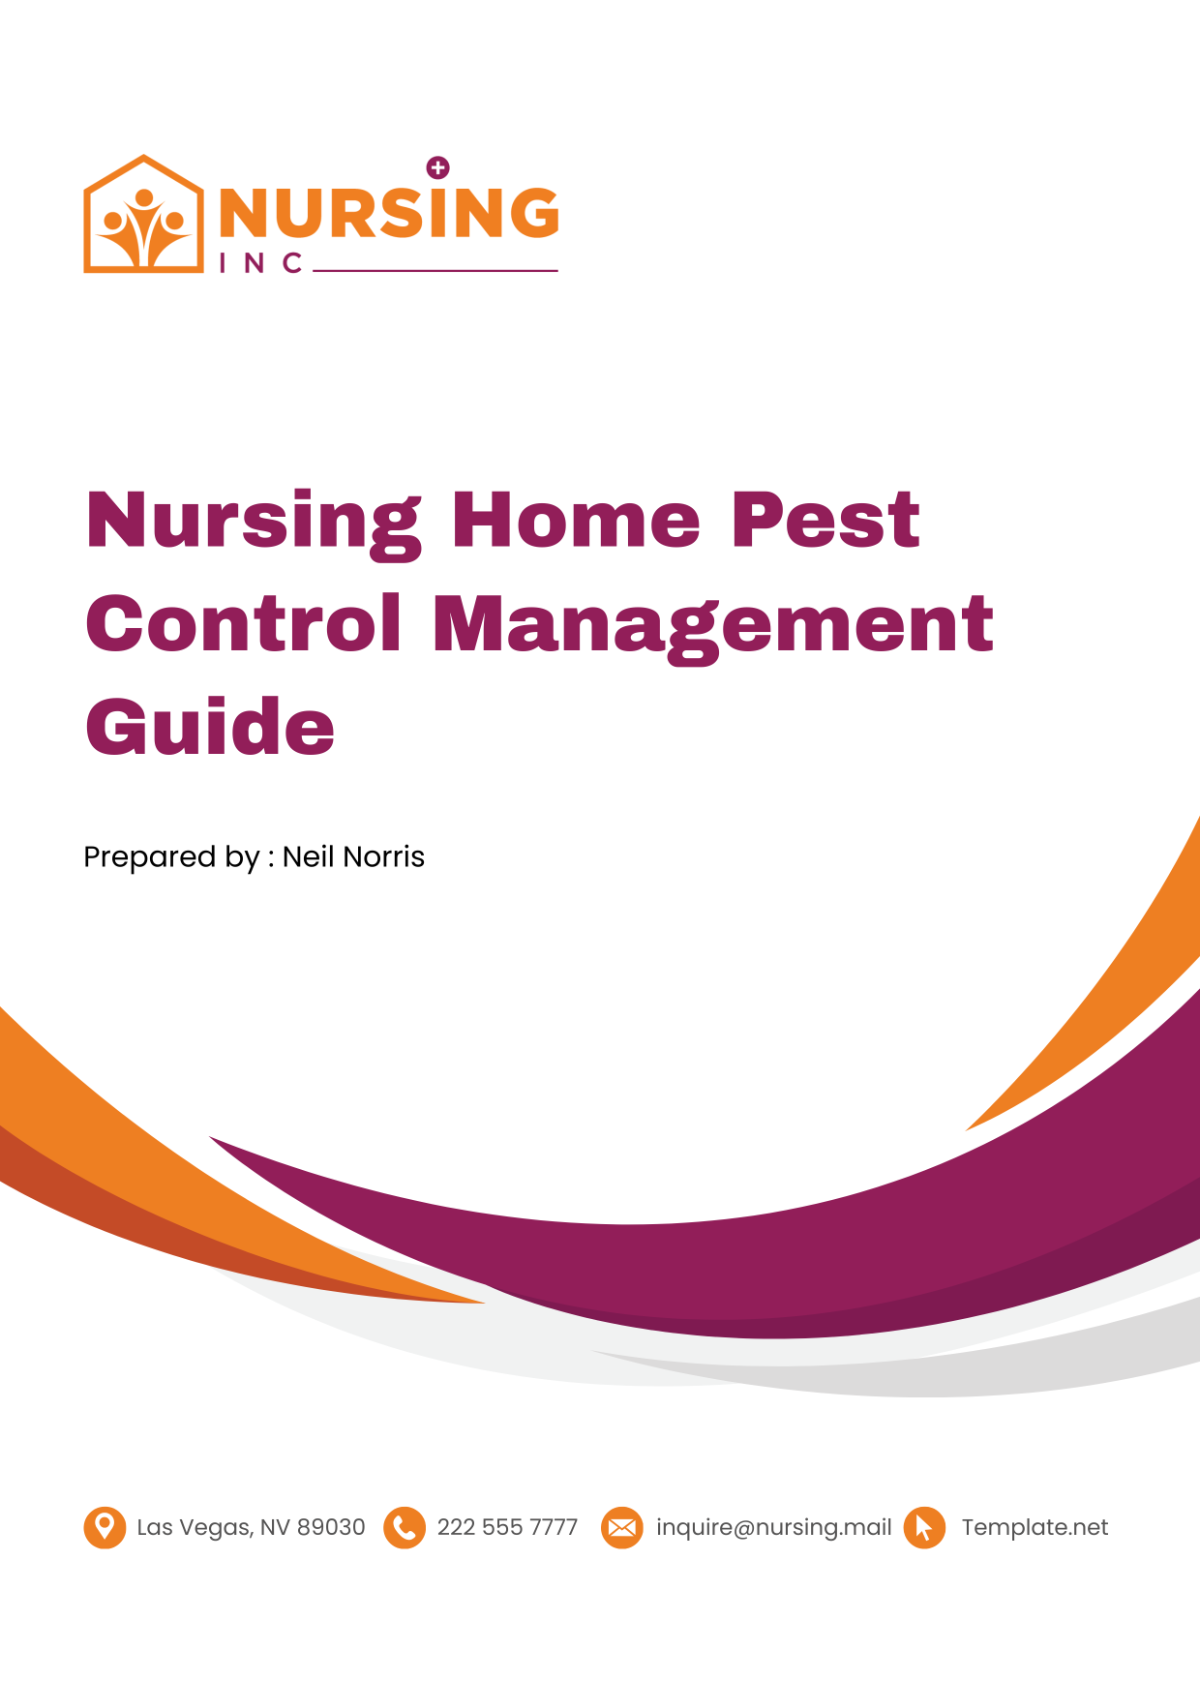 Nursing Home Pest Control Management Guide Template